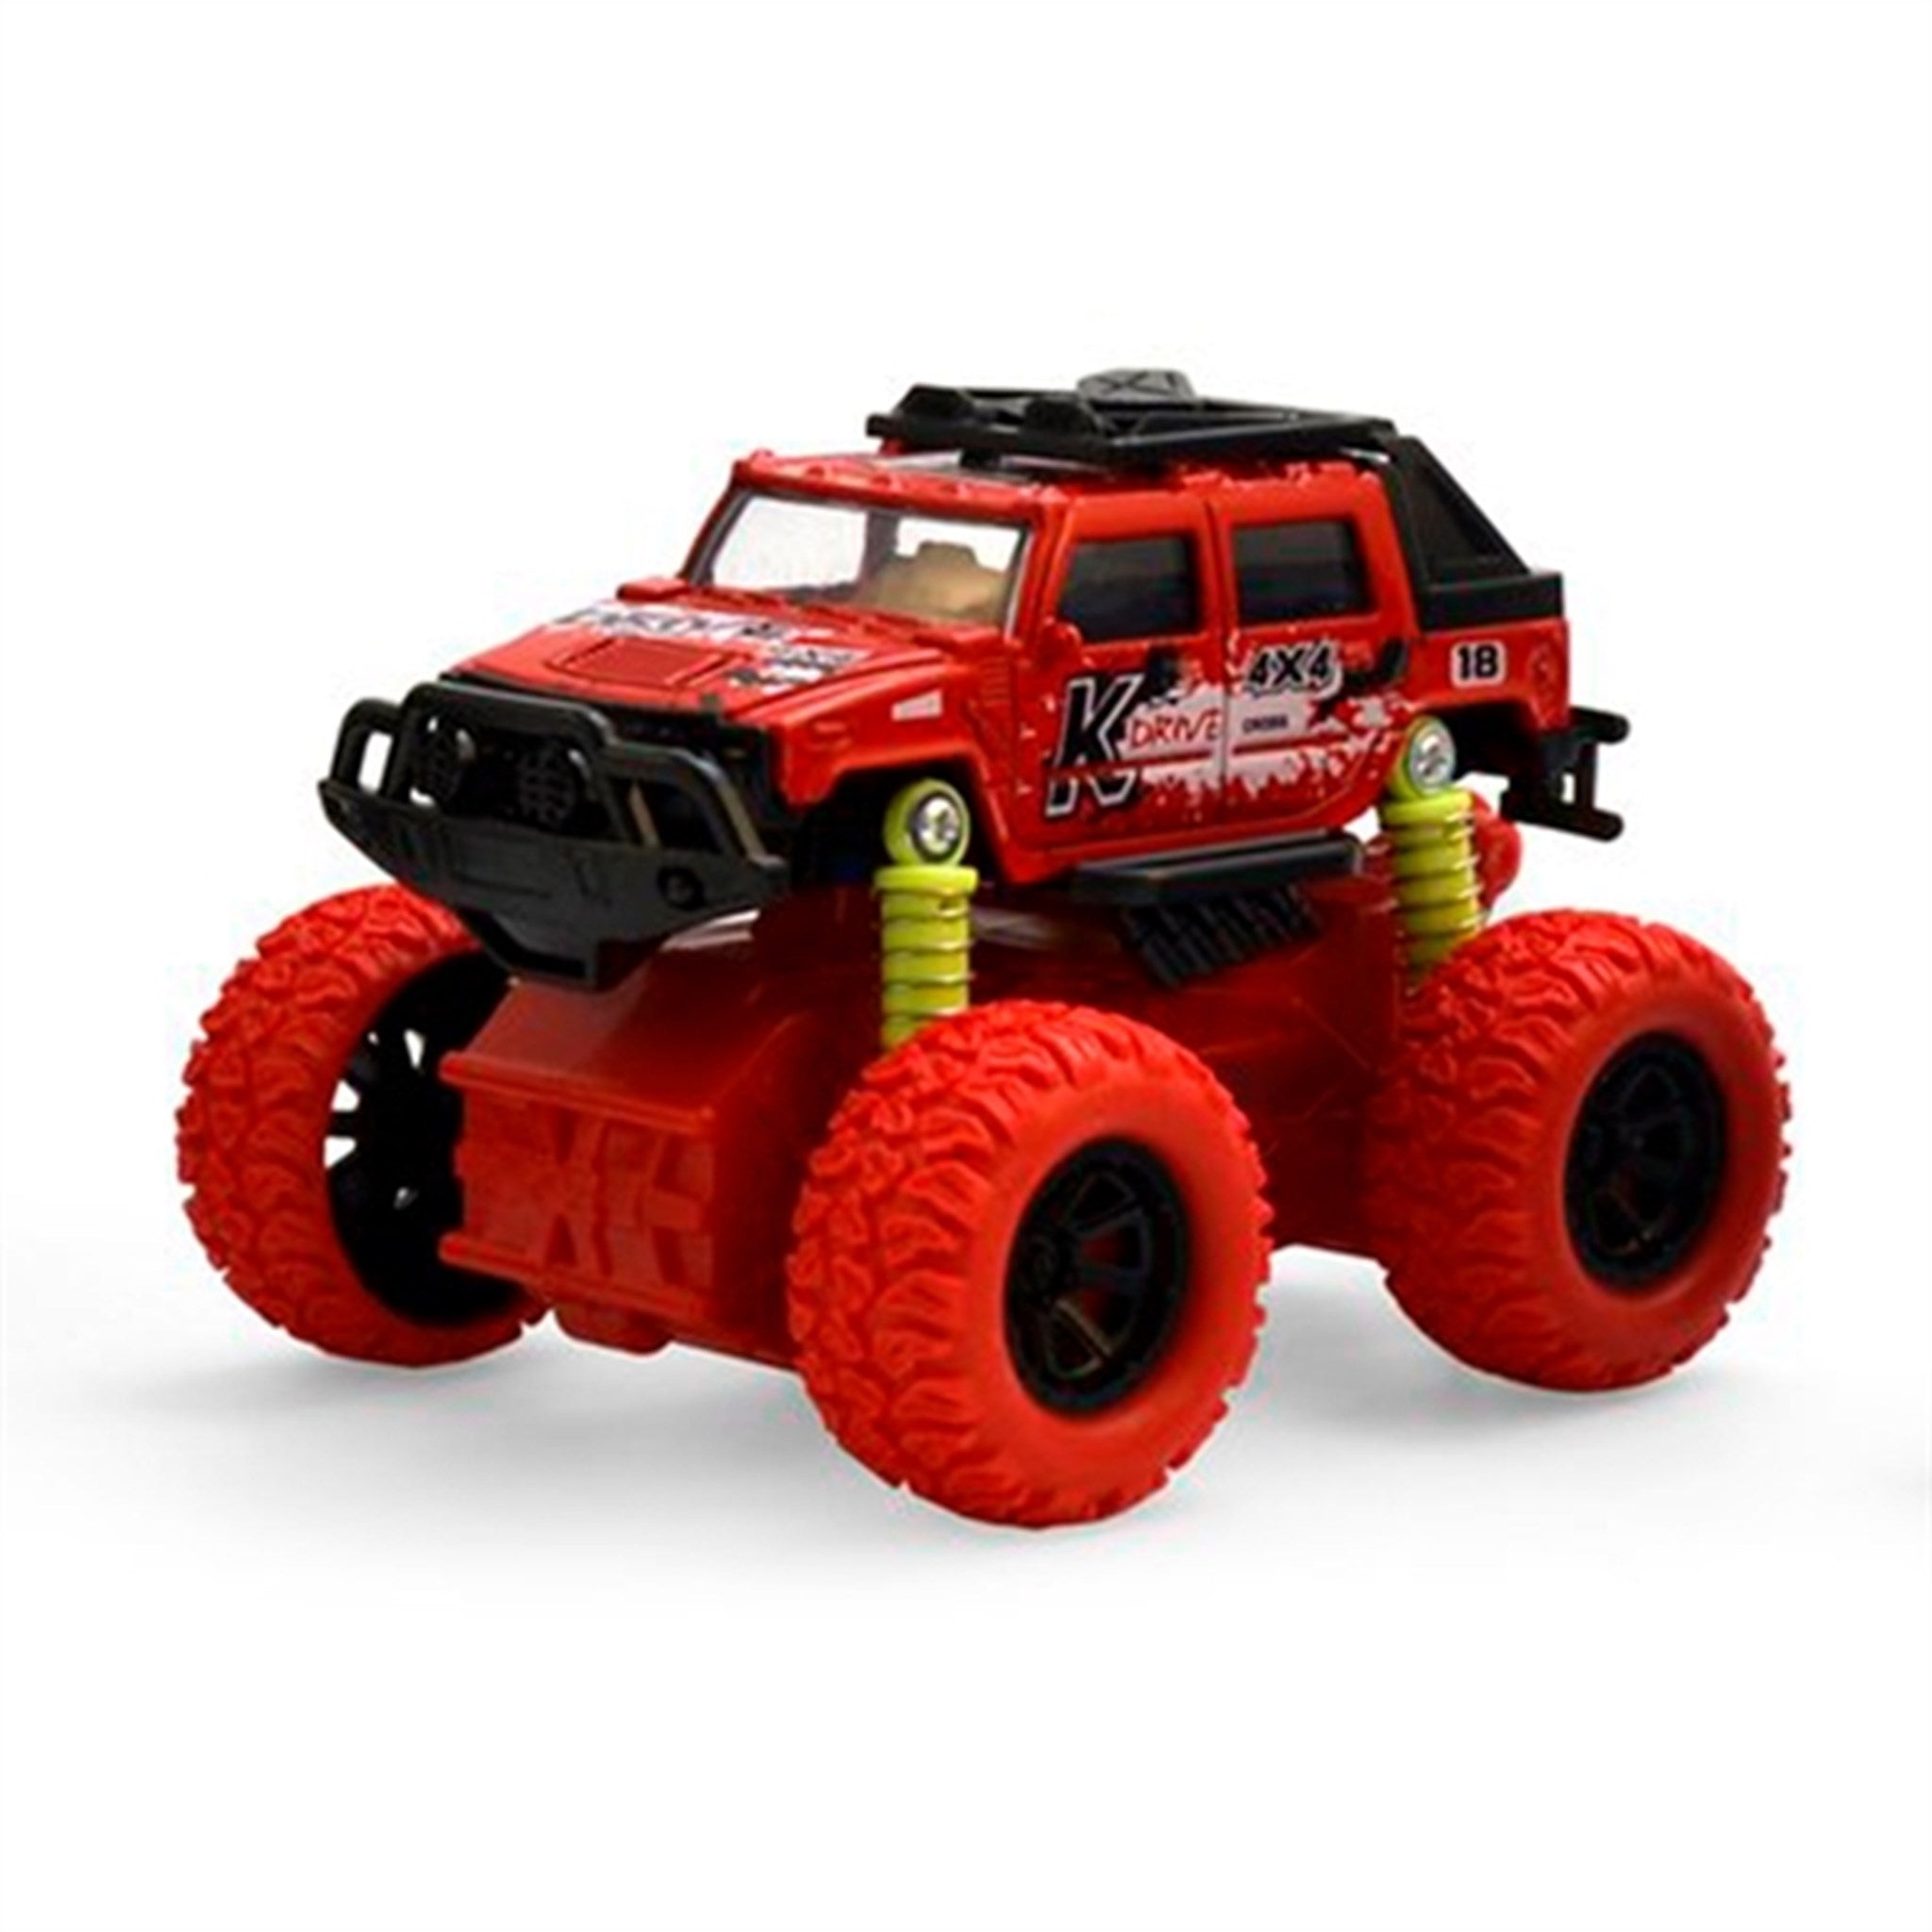 Magni Big Foot Monster Truck Friktionsbil Red